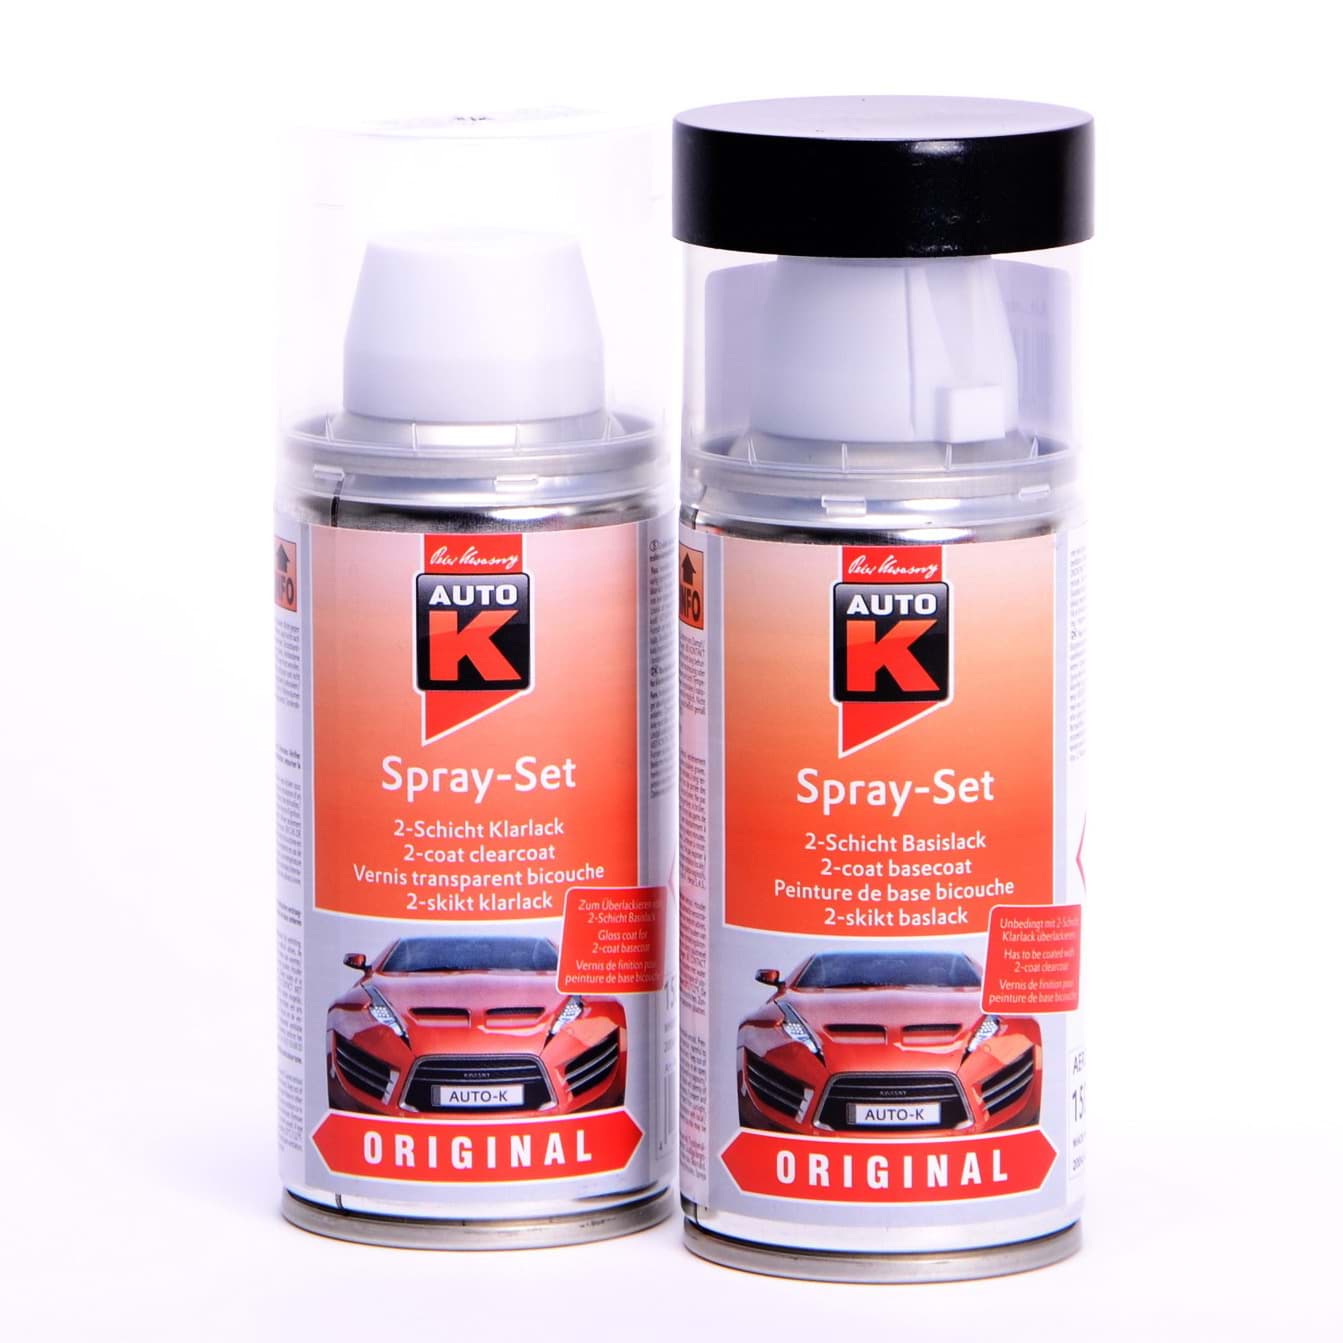 Afbeelding van Auto-K Spray-Set Autolack für Volkswagen, VW, Audi LZ9W Ebonyschwarz perl met 20901